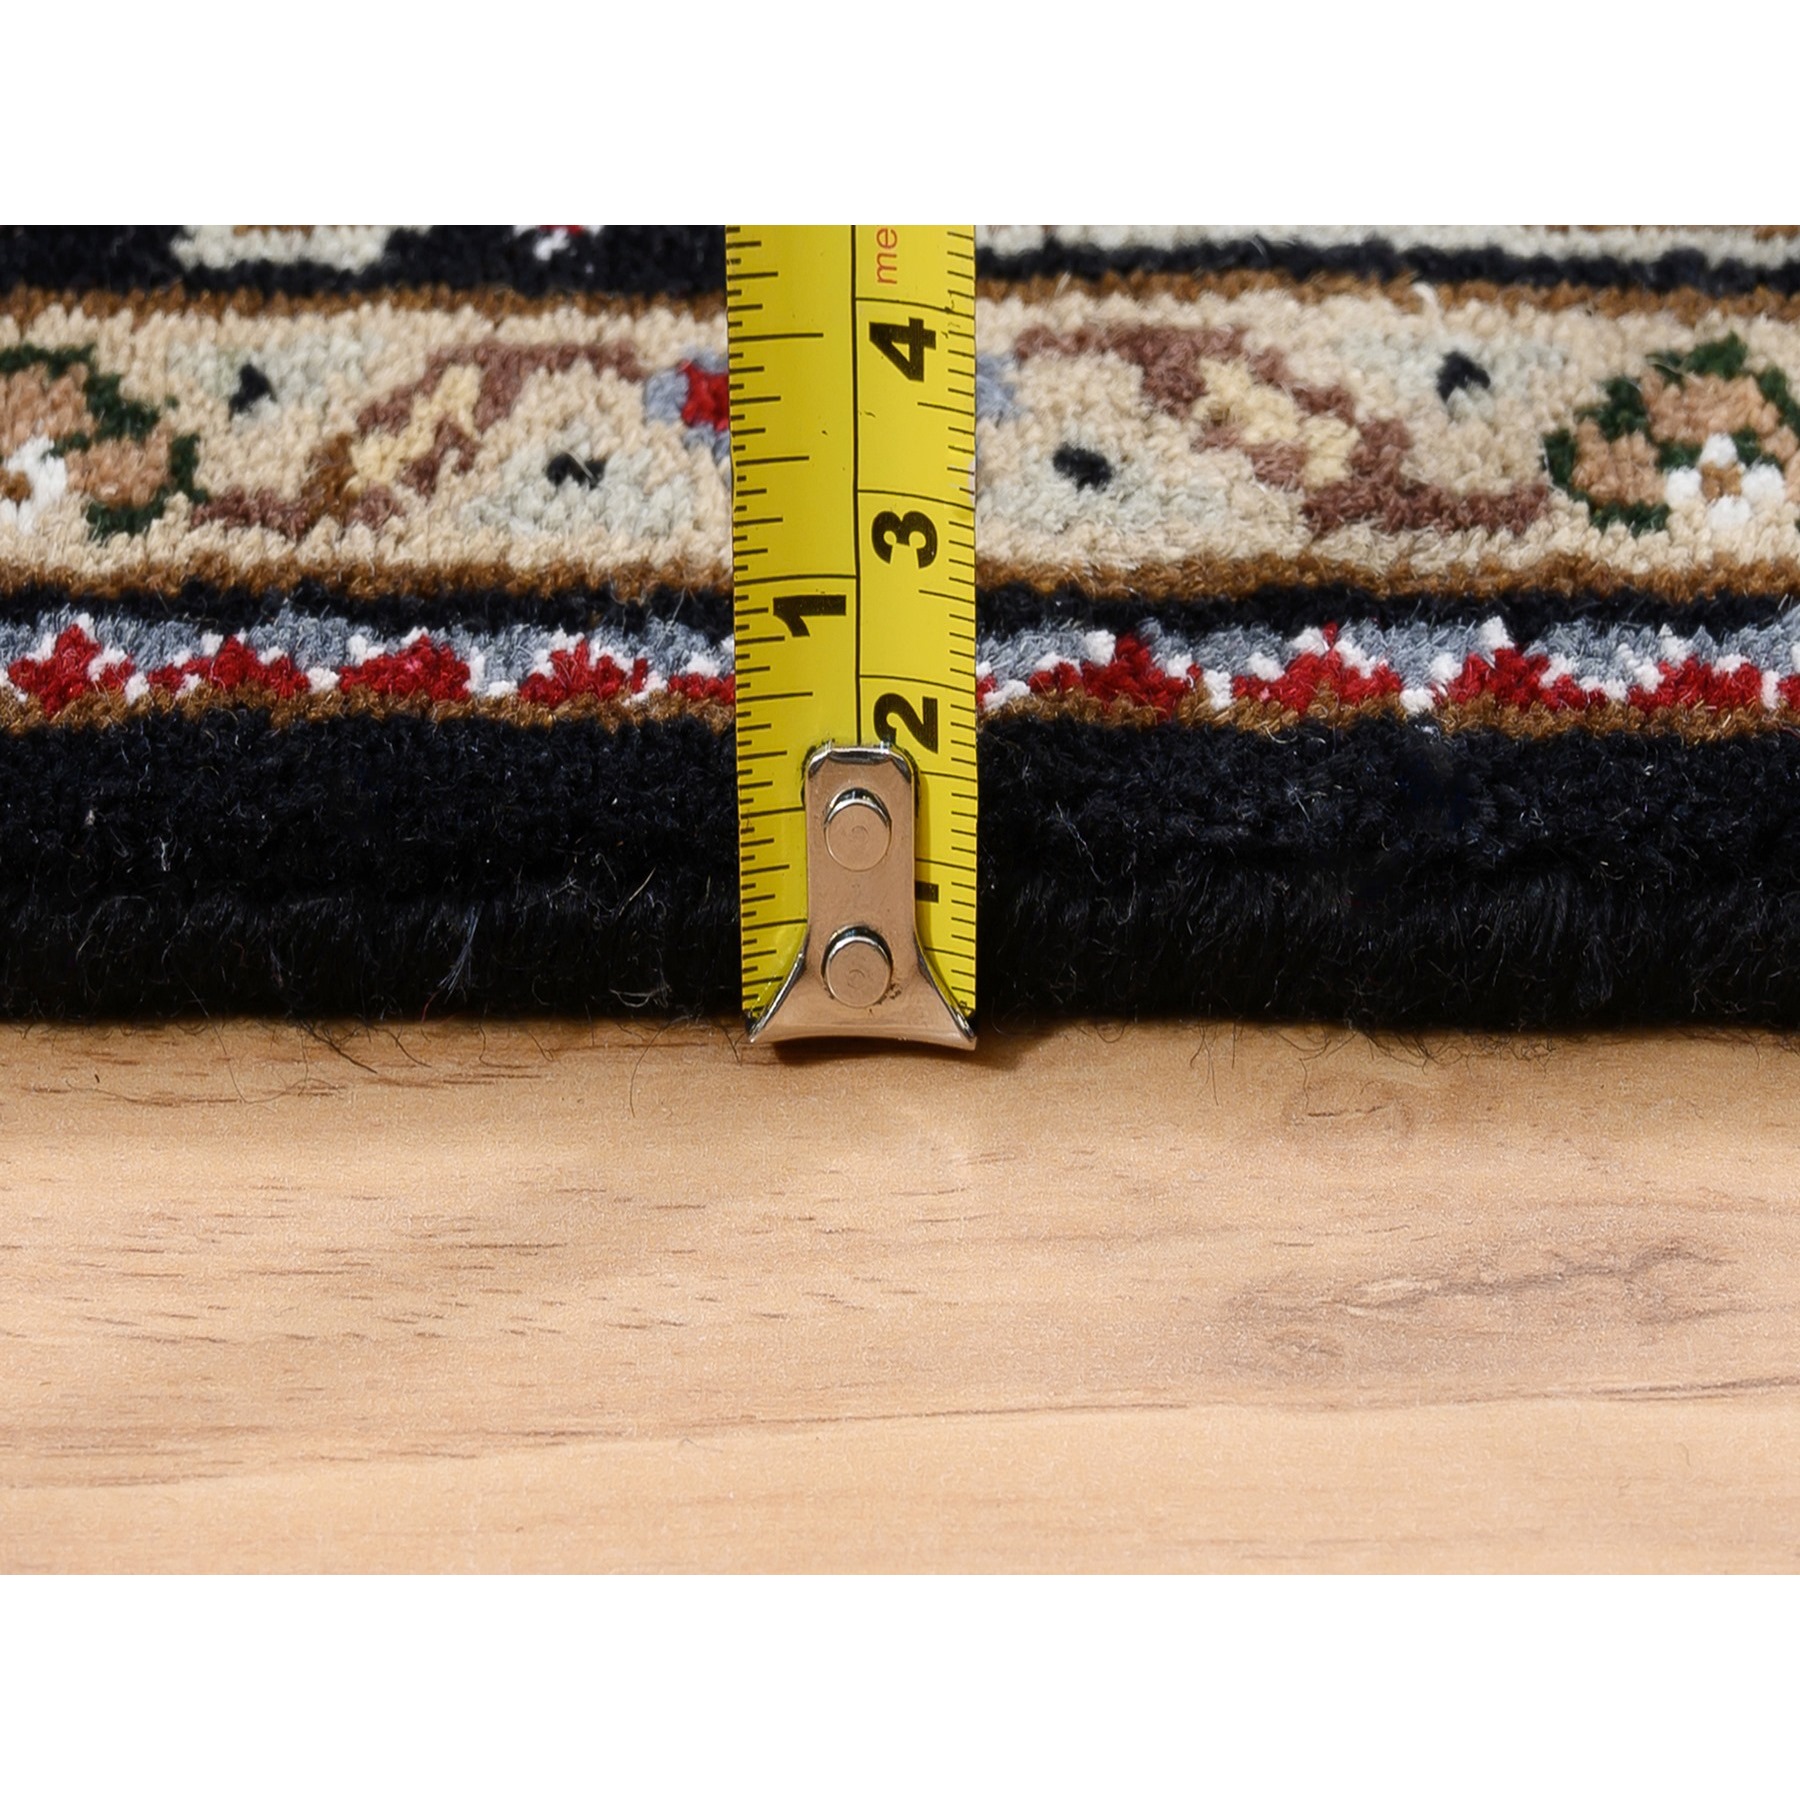 4'2"x20' Hand Woven Wool and Silk Midnight Black Tabriz Mahi with Fish Medallions Design Oriental Wide XL Runner Rug 